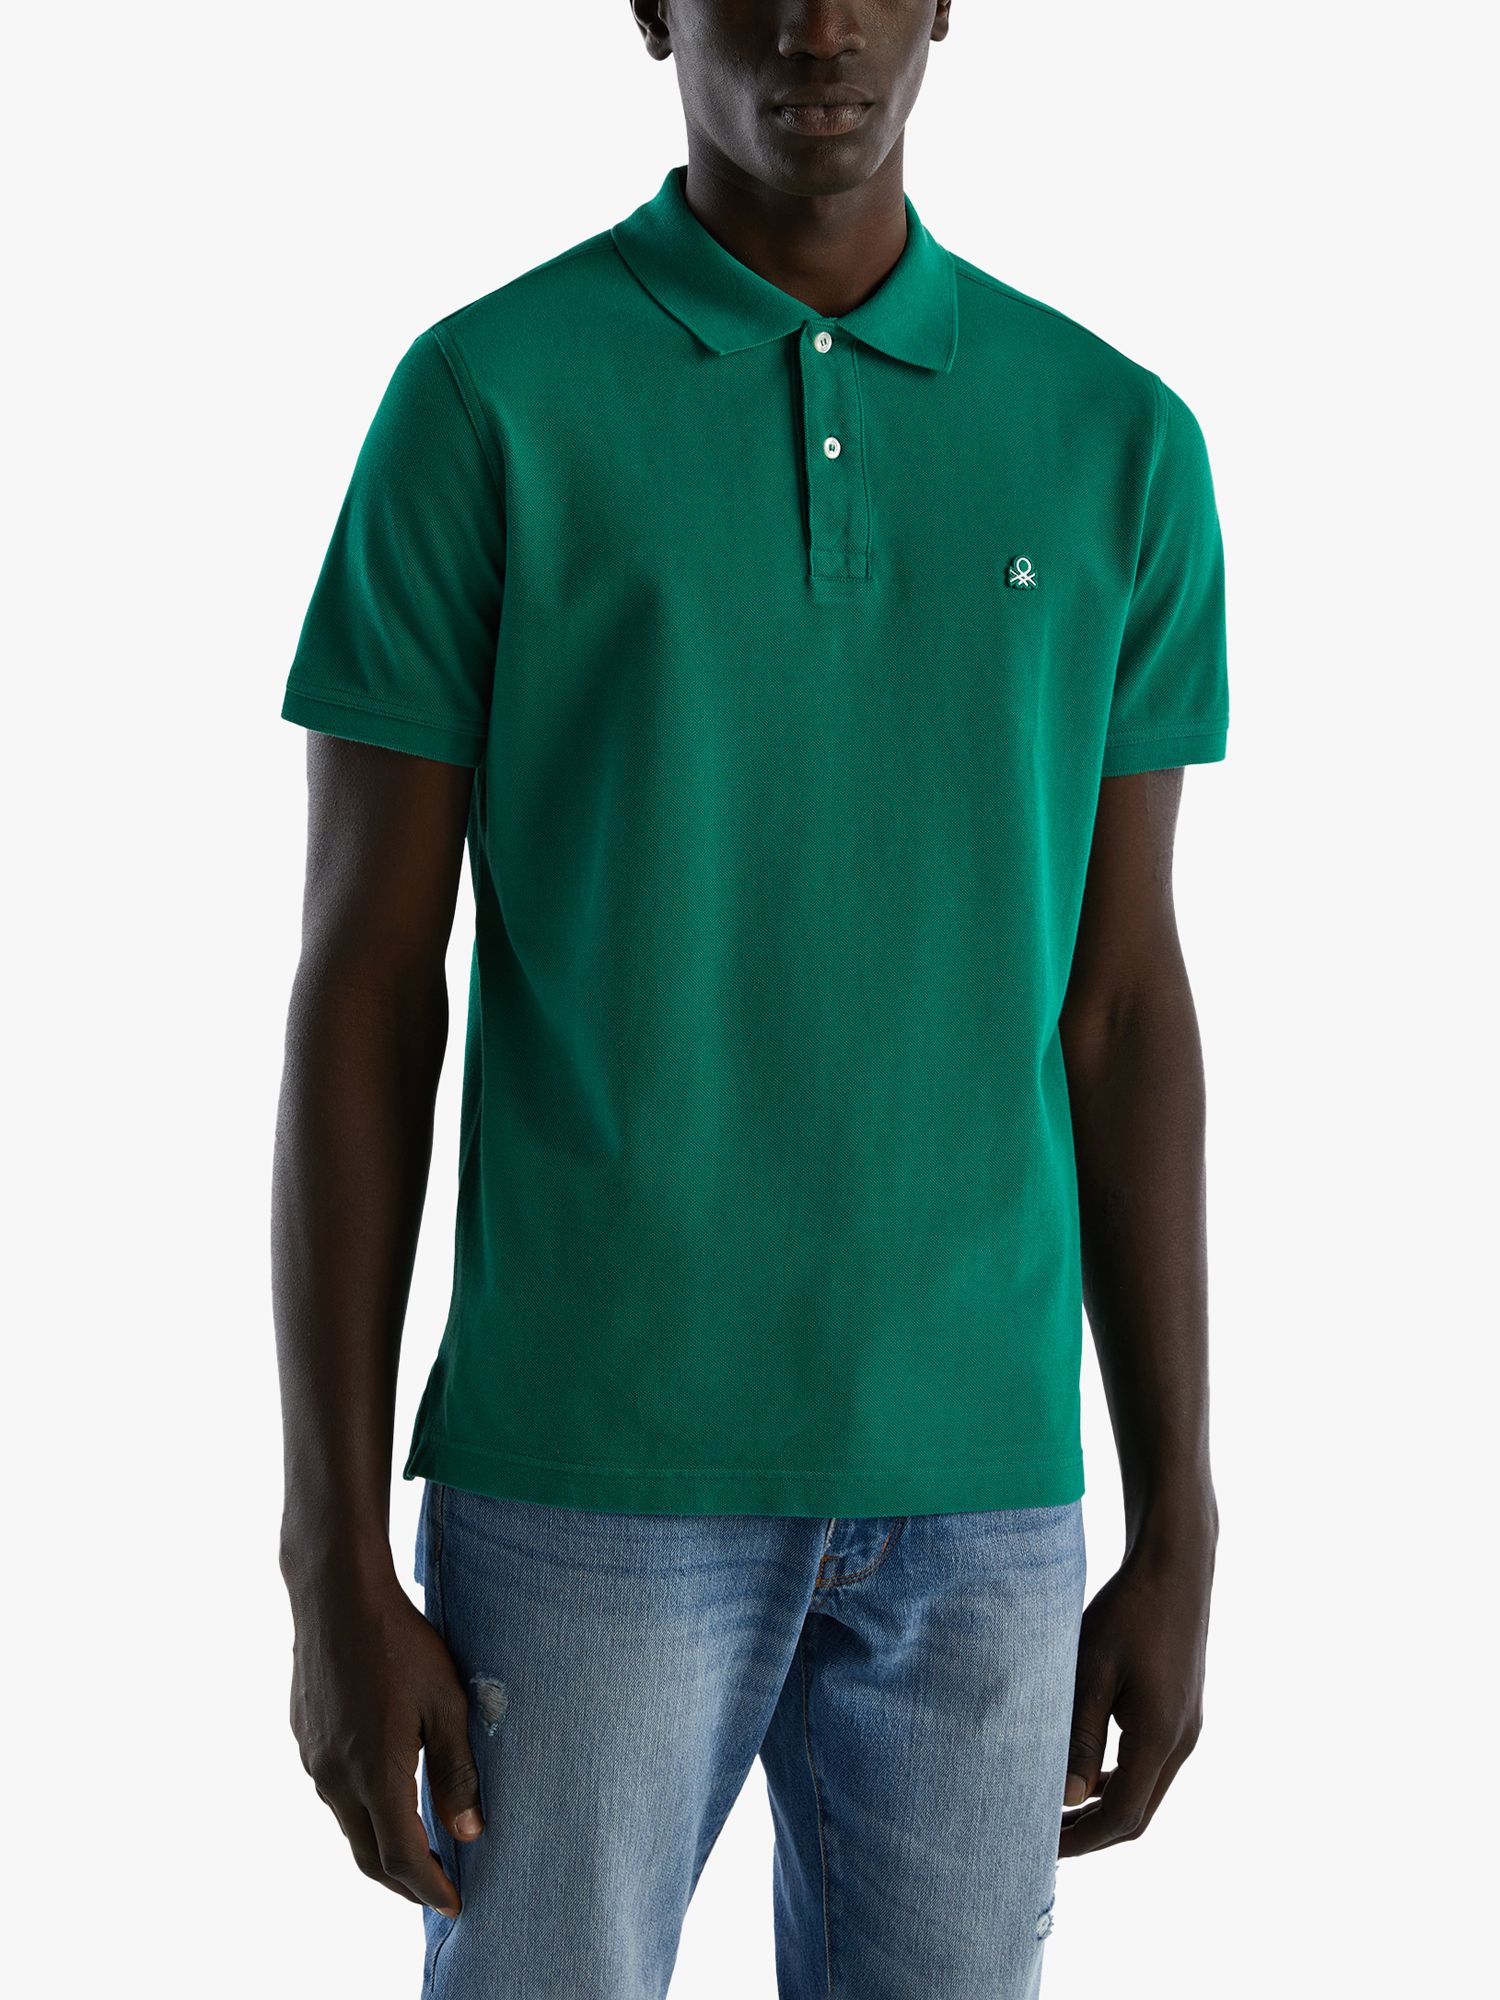 Benetton Short Sleeve Polo Shirt, Emerald Green, M